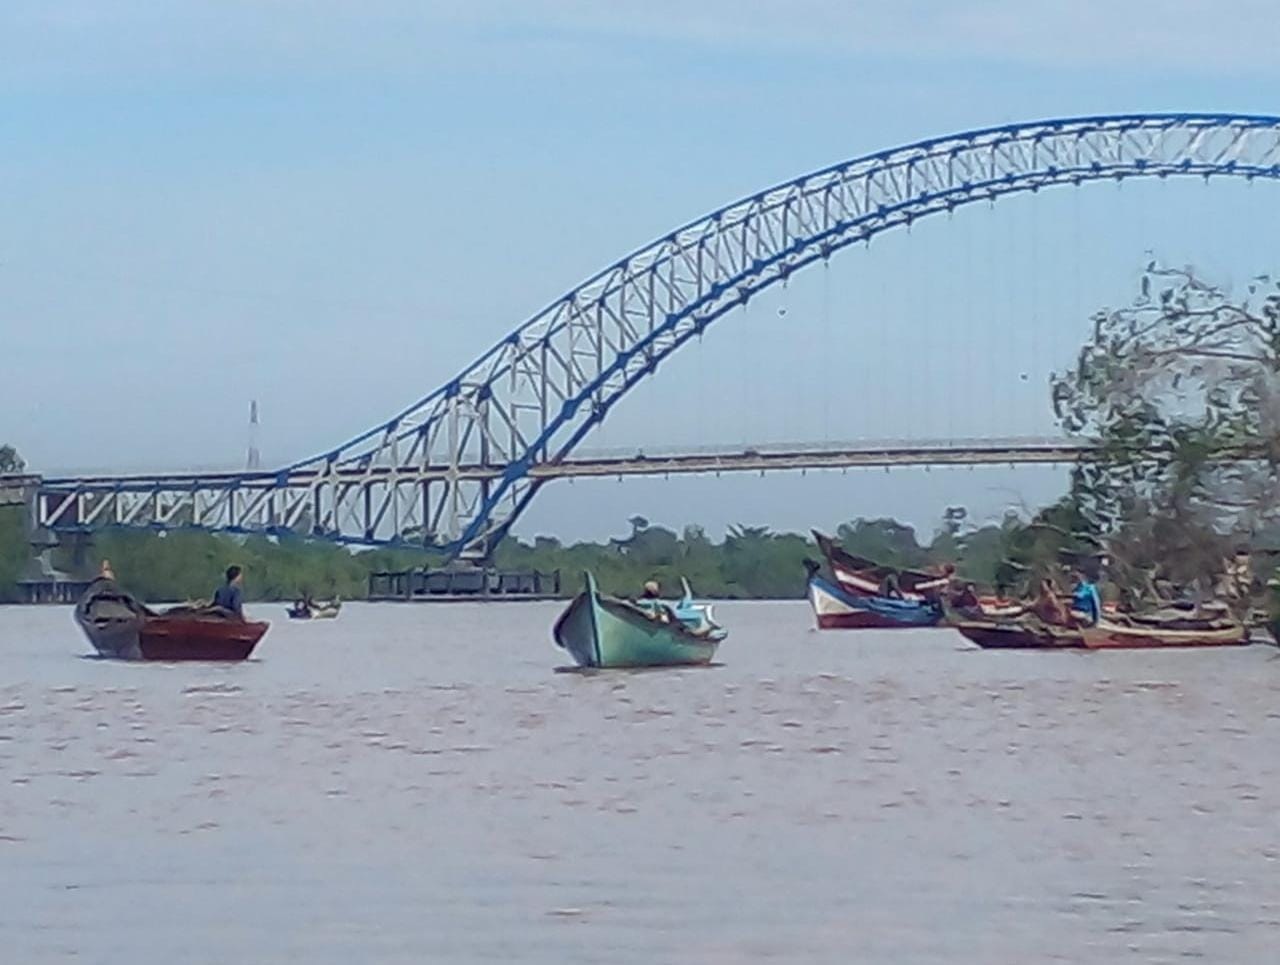 Pompong Muatan Pinang Karam di Sungai Batanghari, 1 Orang Dinyatakan Hilang